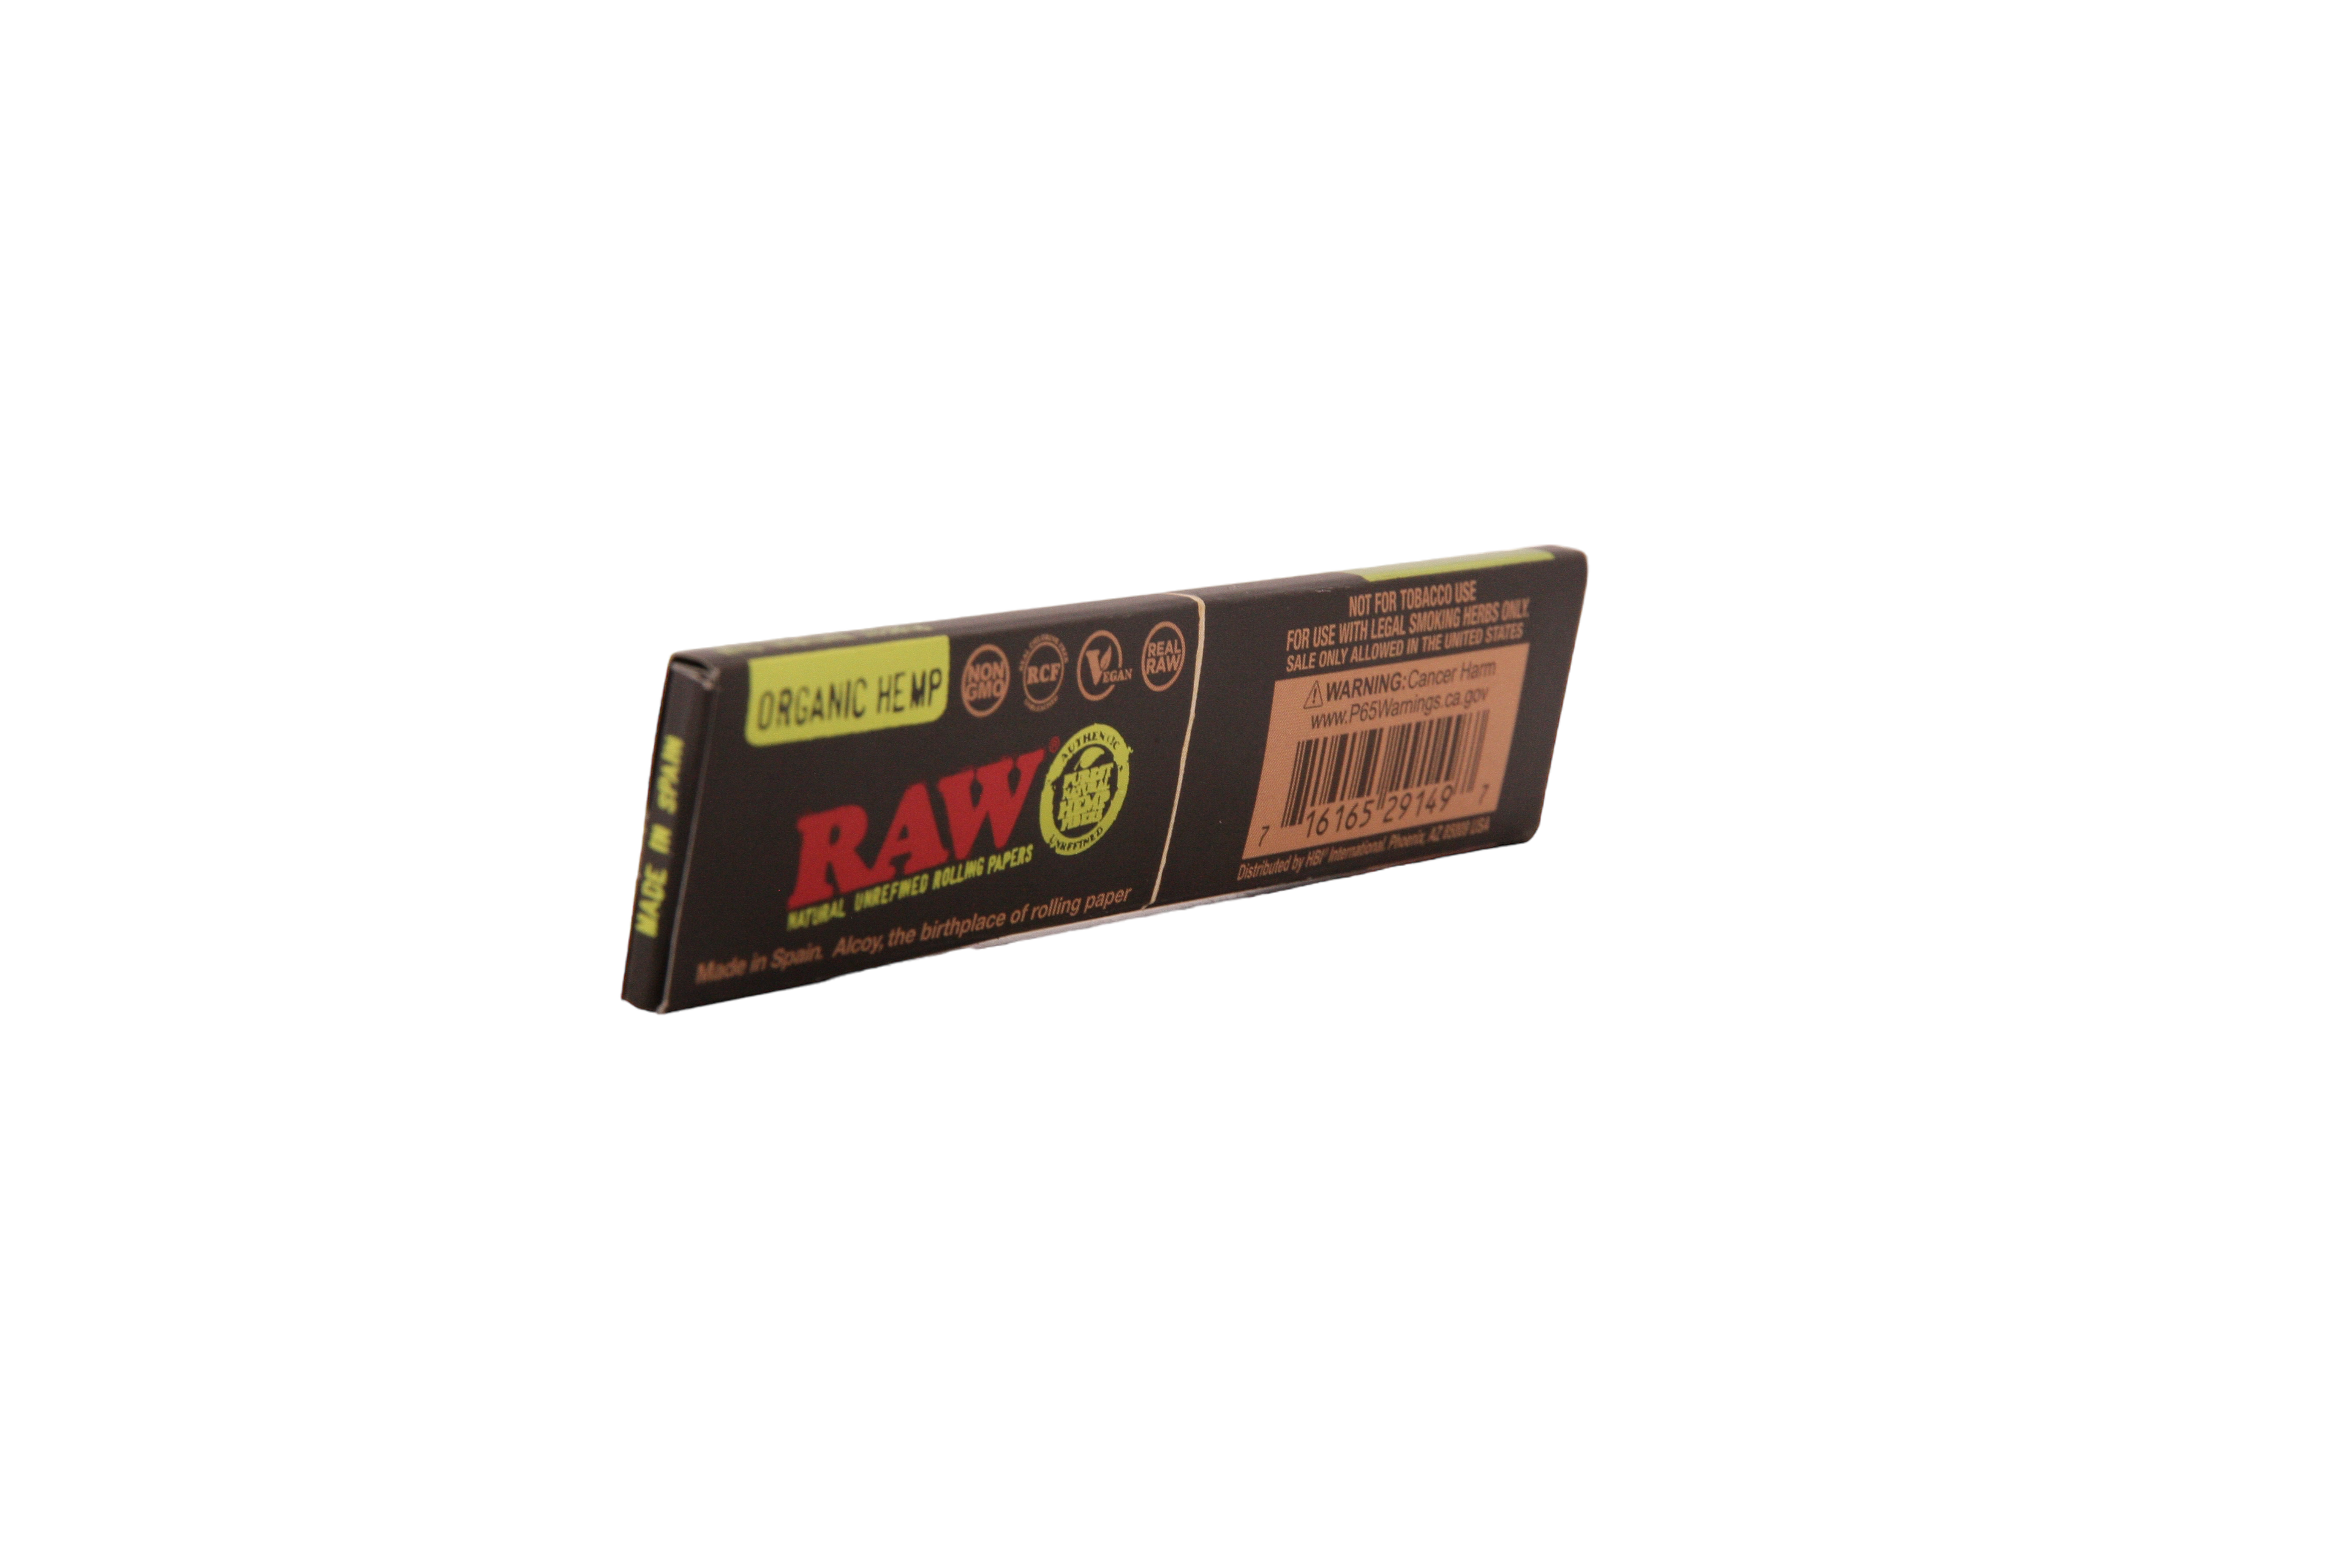 Raw Black Organic Hemp Papers - King Size Slim